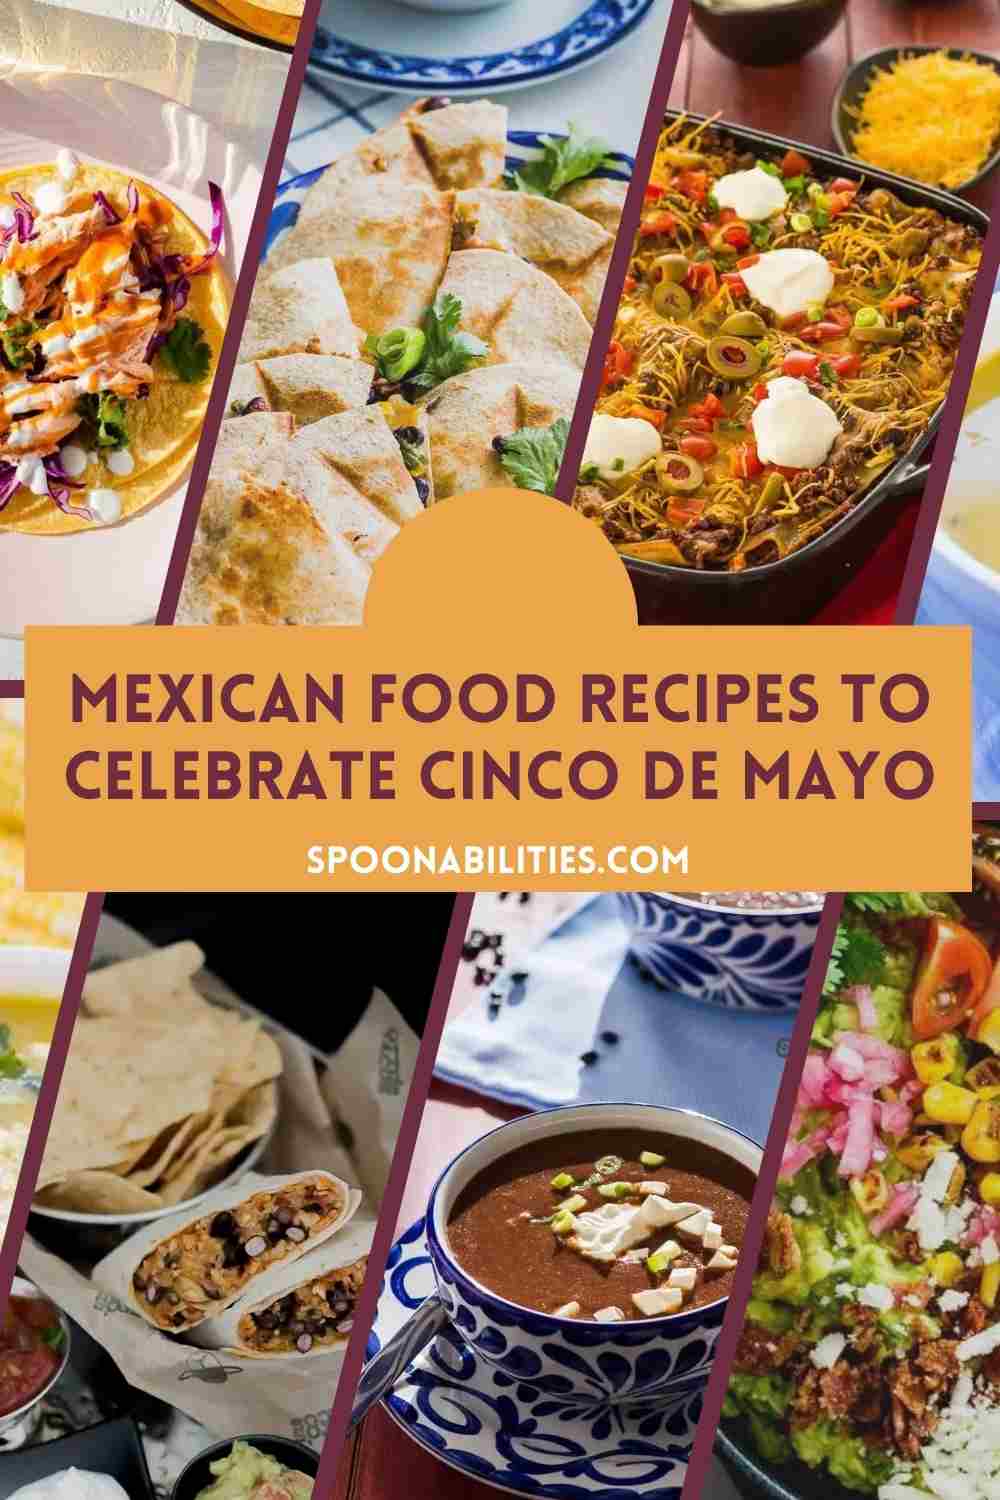 Mexican food recipes to celebrate Cinco de Mayo